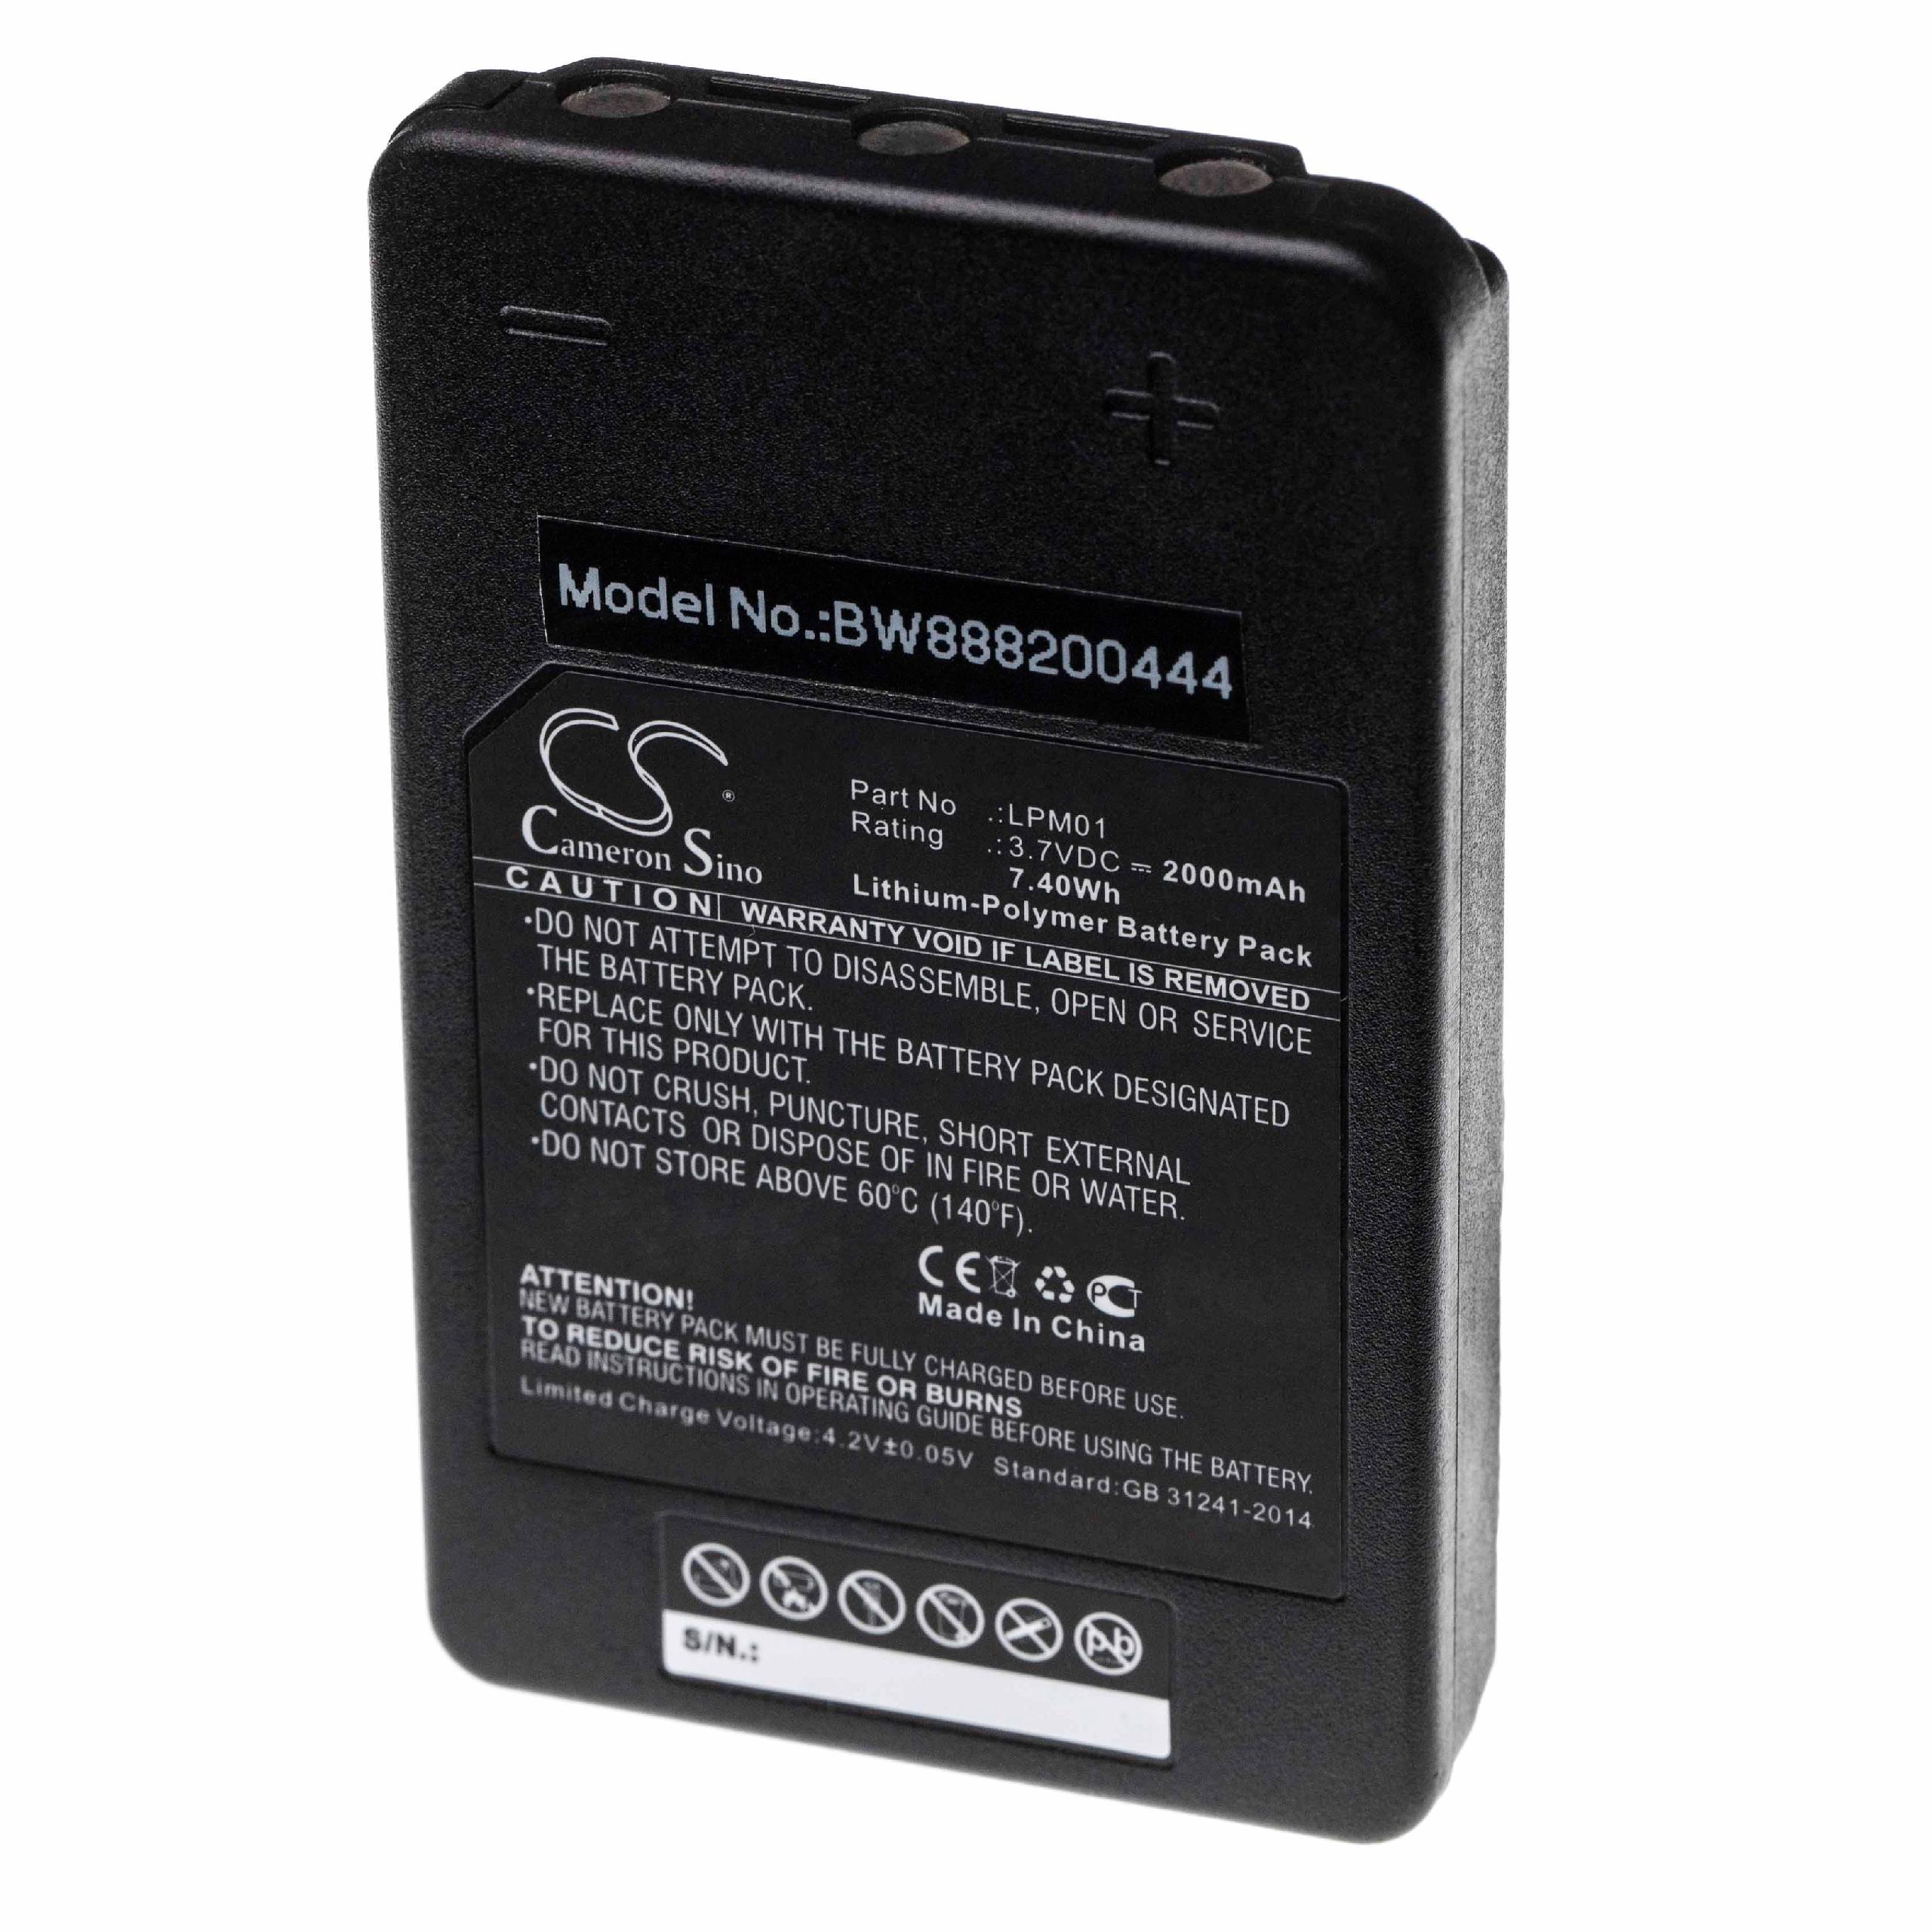 Batteria per radiocomando industriale sostituisce Autec MHM03, LPM01LI, LPM01 Autec - 2000mAh 3,7V Li-Poly